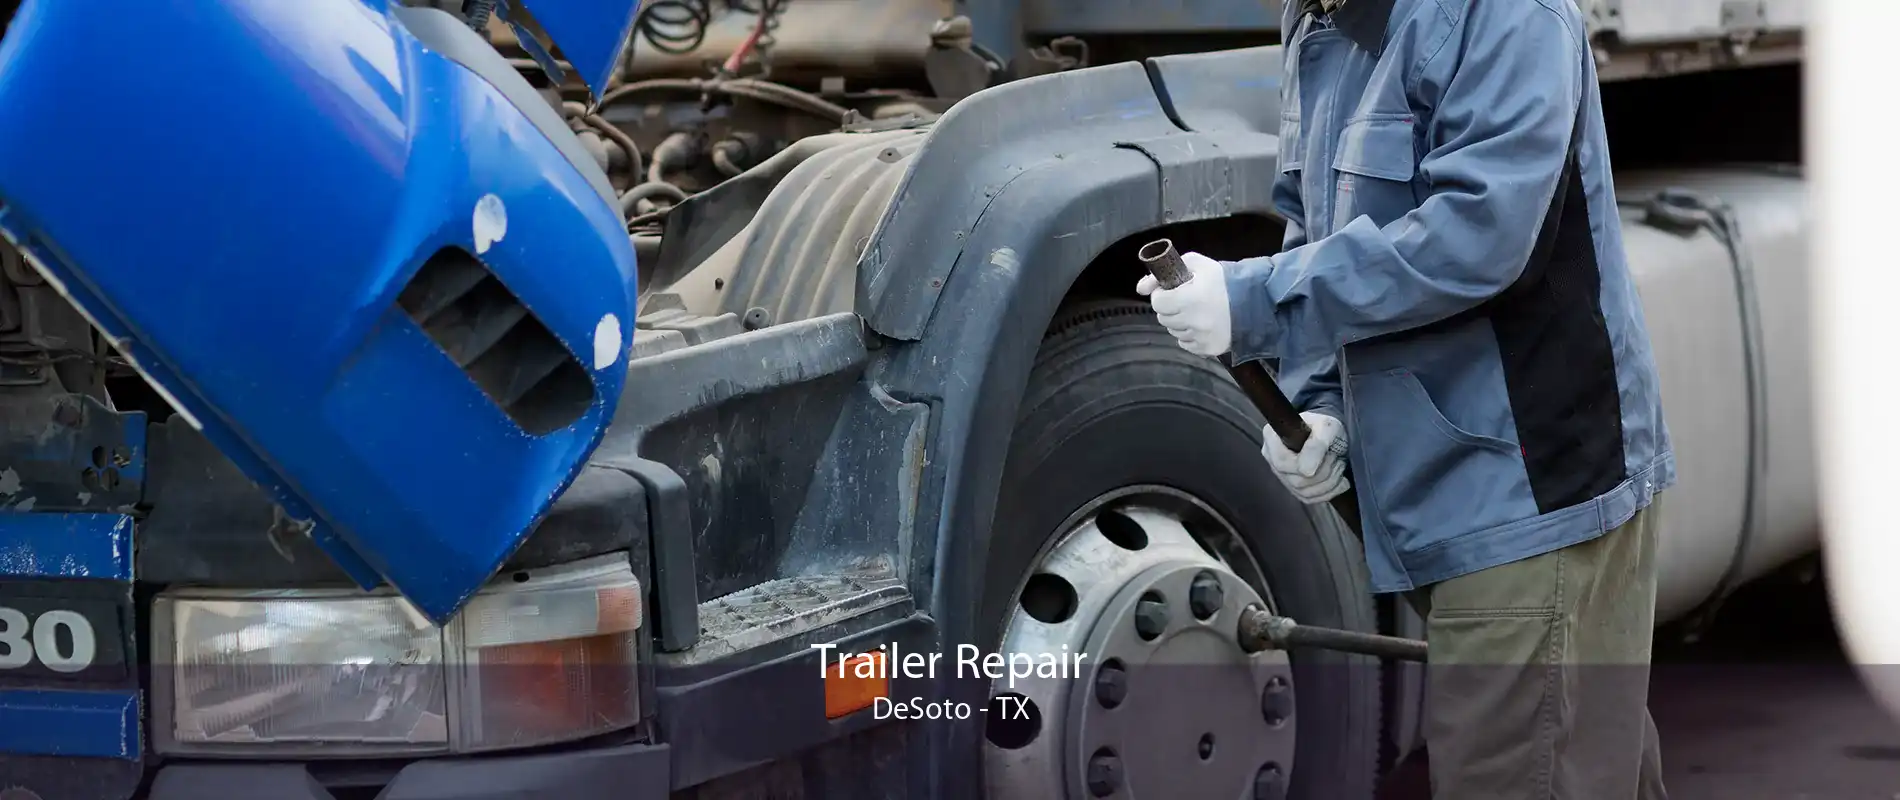 Trailer Repair DeSoto - TX